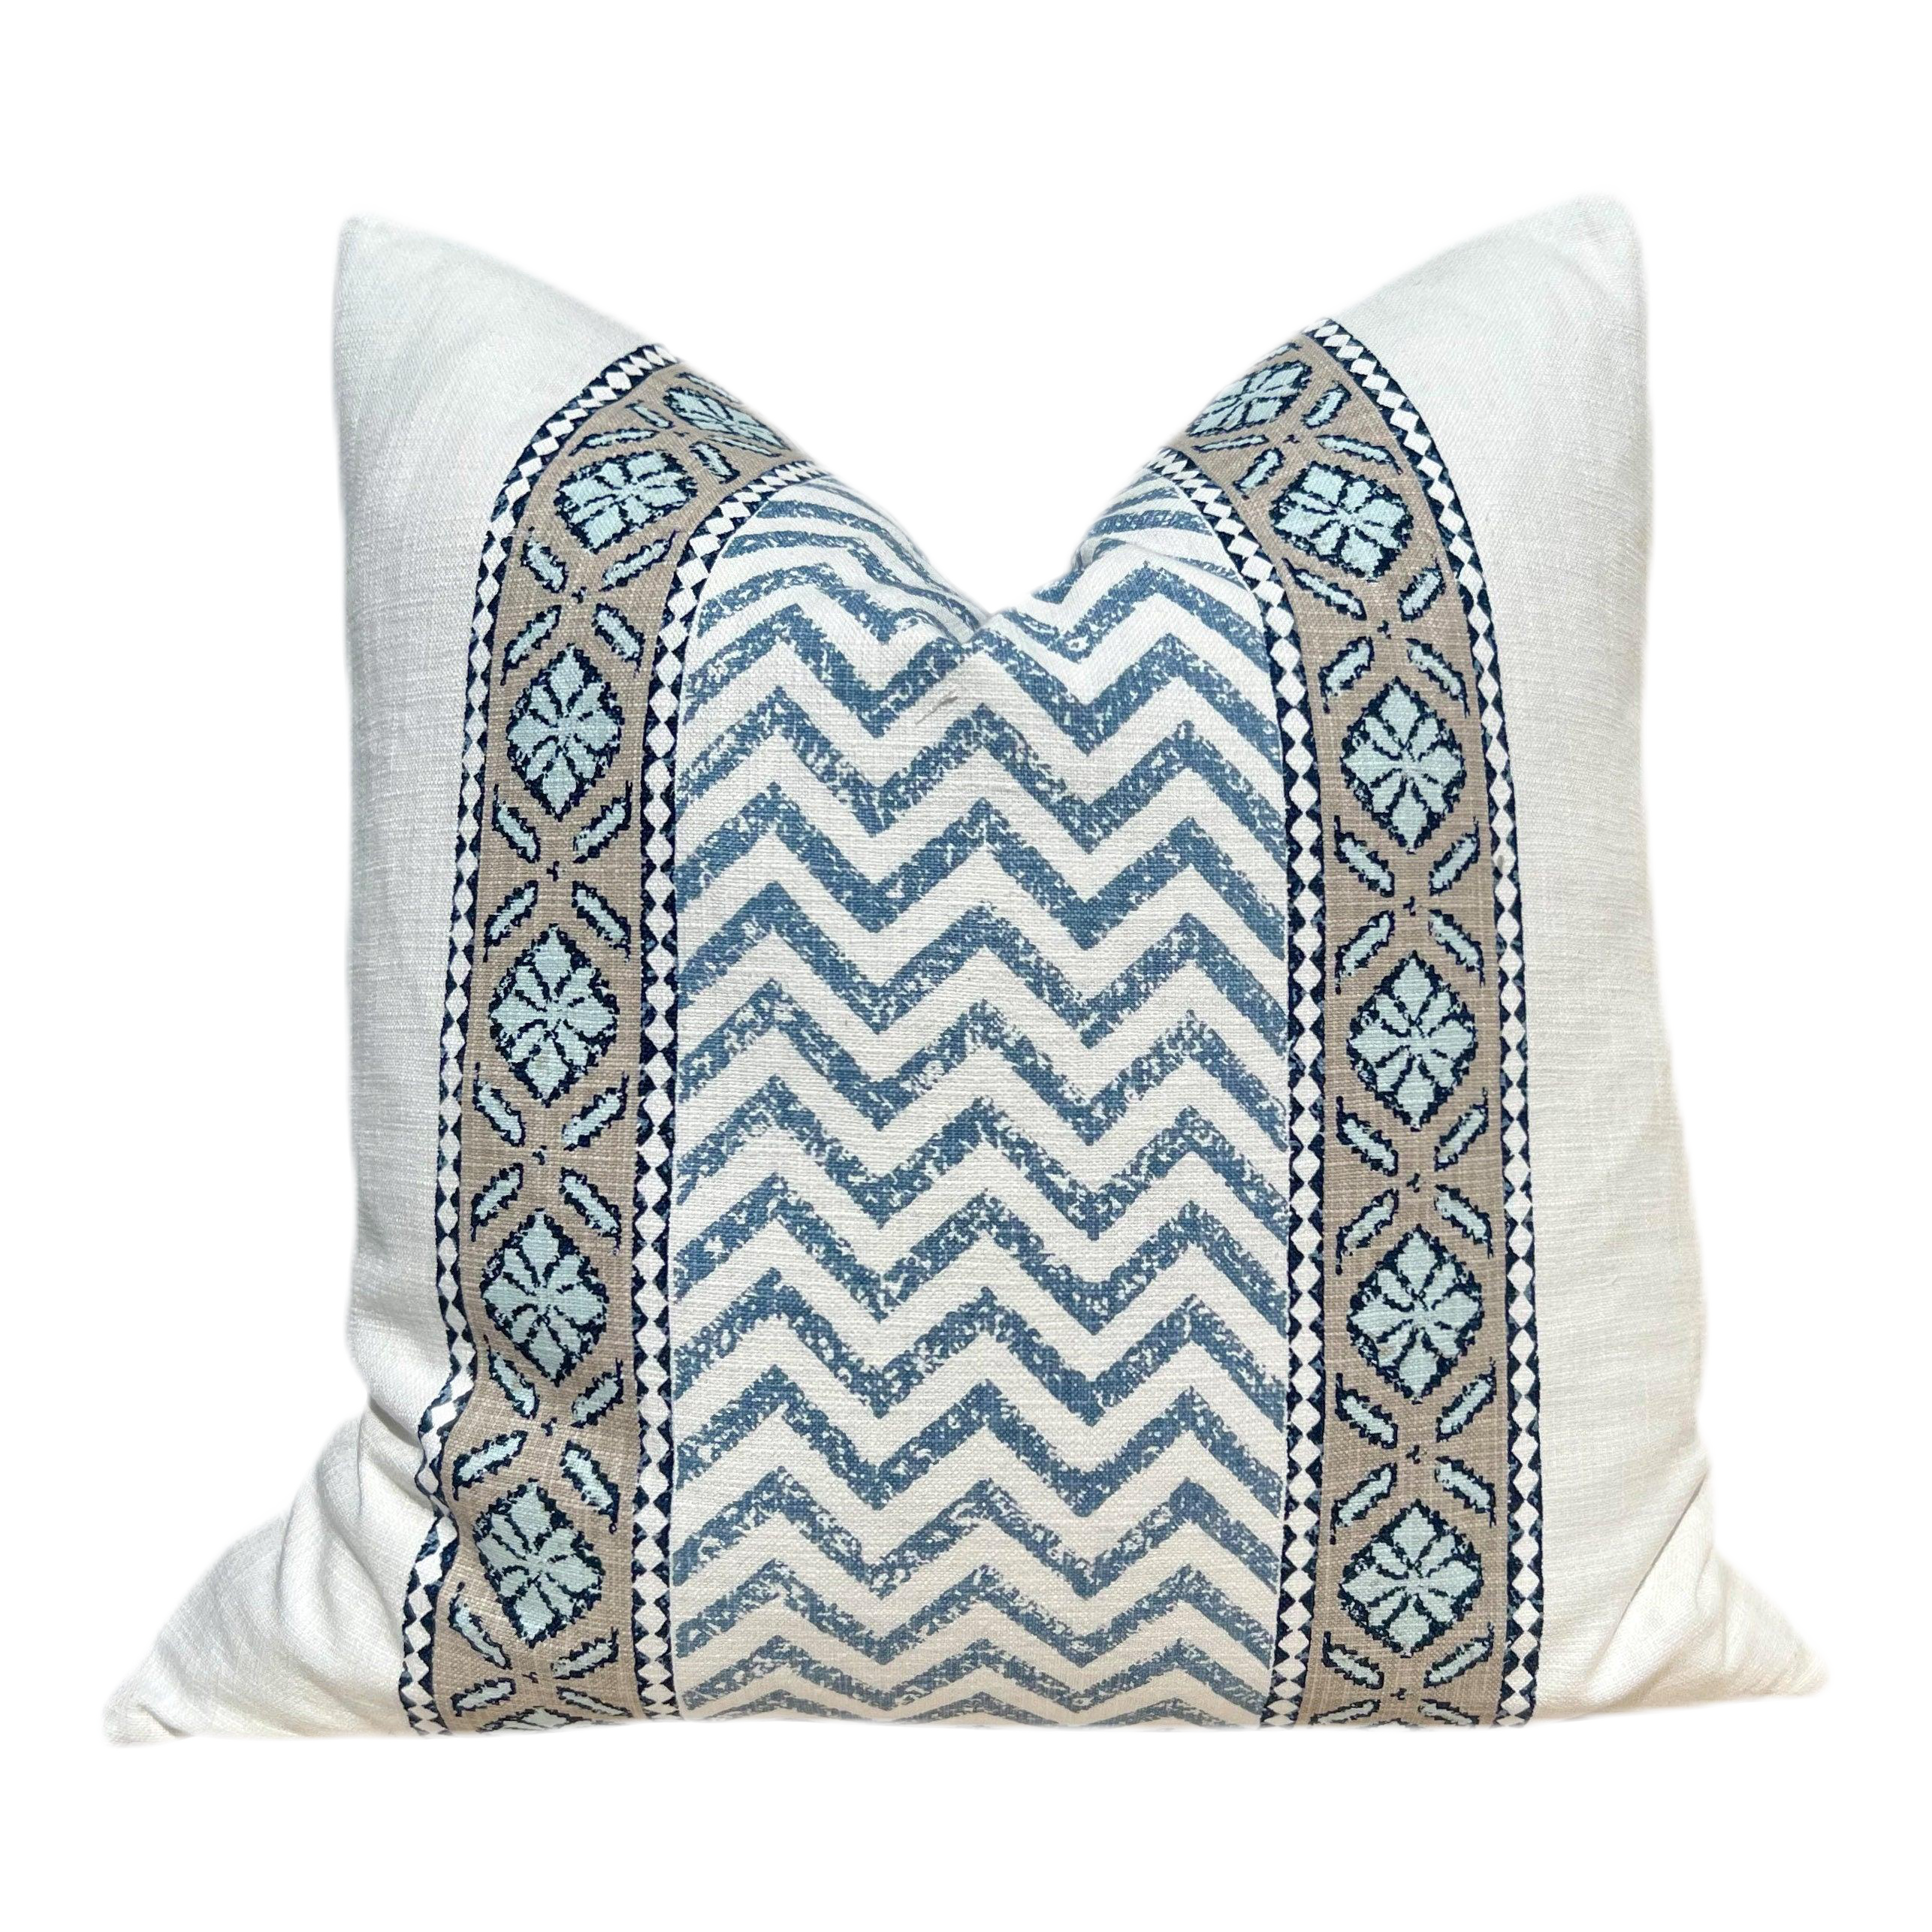 Designer Striped Pillow in Aqua Blue.